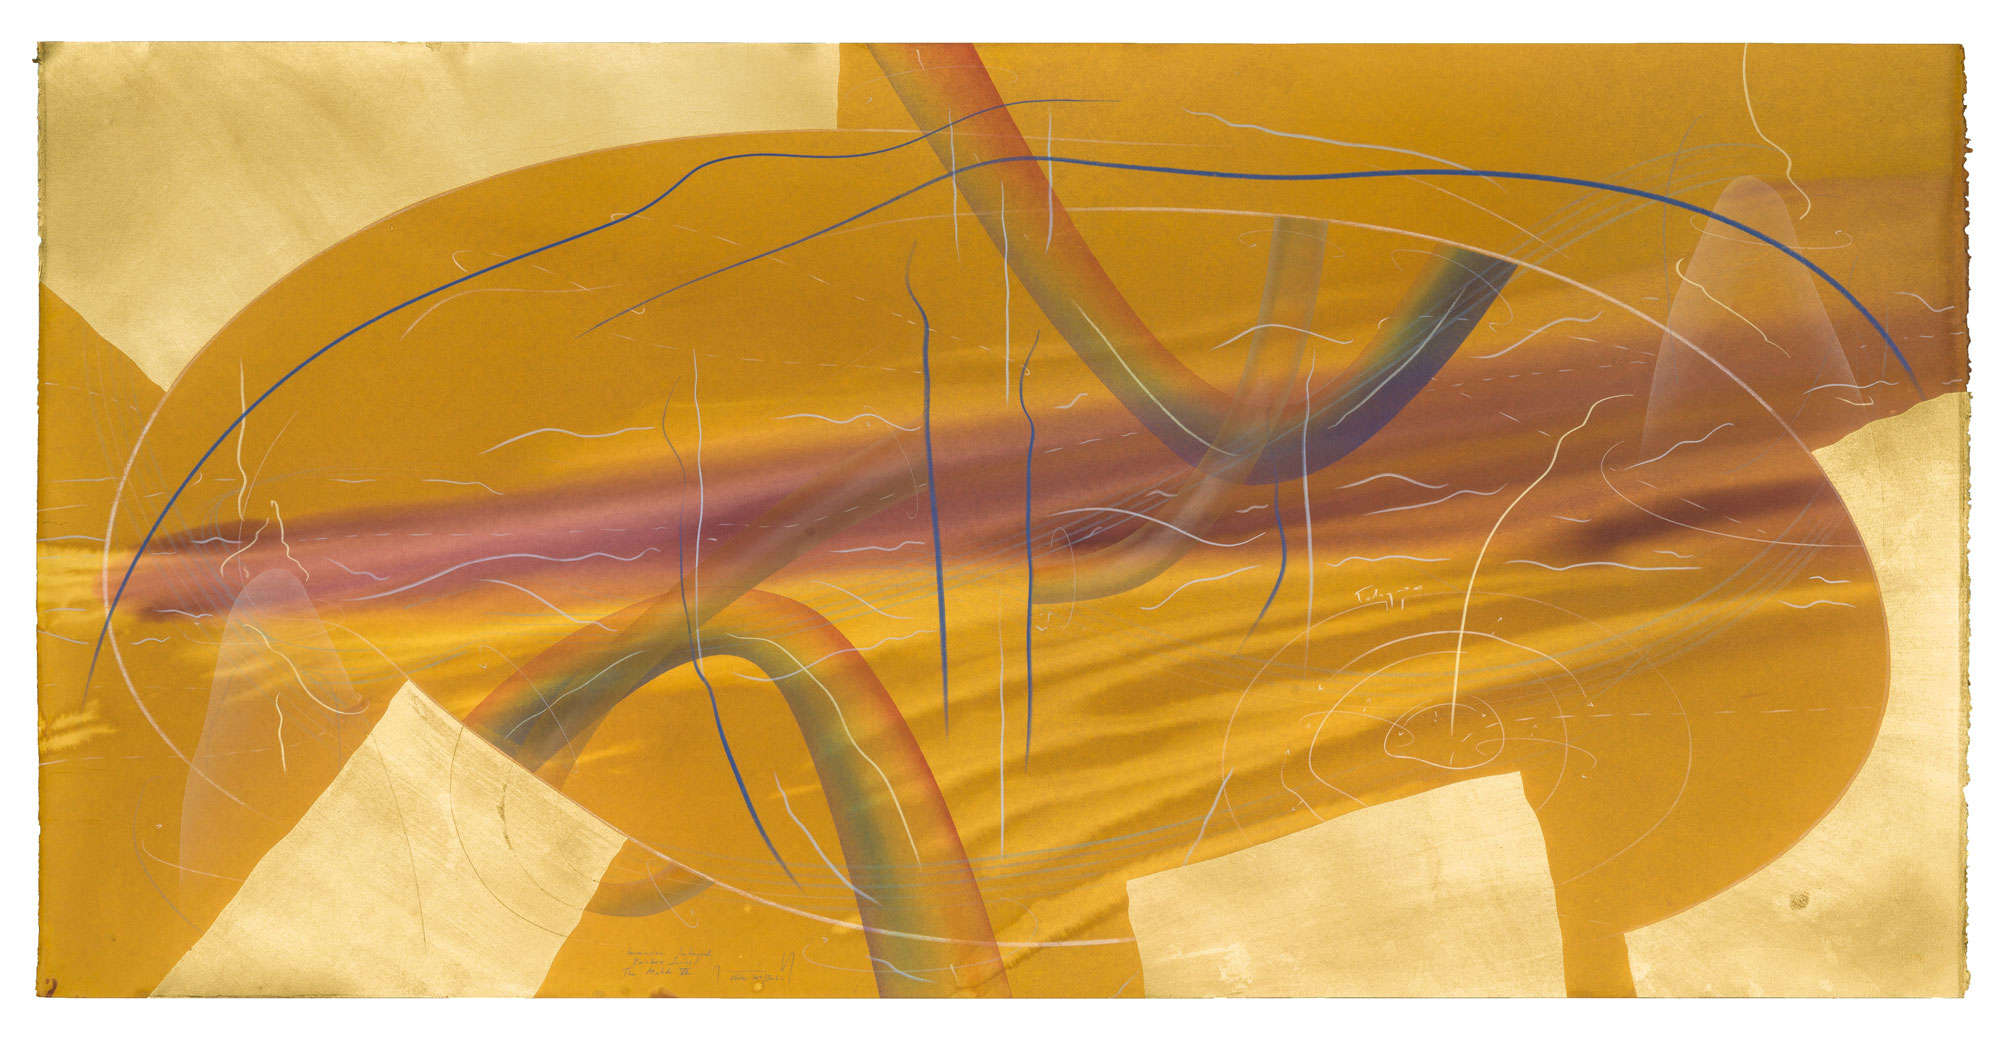 WV 2019-112 Immersive Integral Rainbow Series The Match VII Jorinde Voigt Berlin October 2019 140,7 x 69,7 cm India ink, gold leaf, pastel, oil chalks, graphite on paper unique work signed